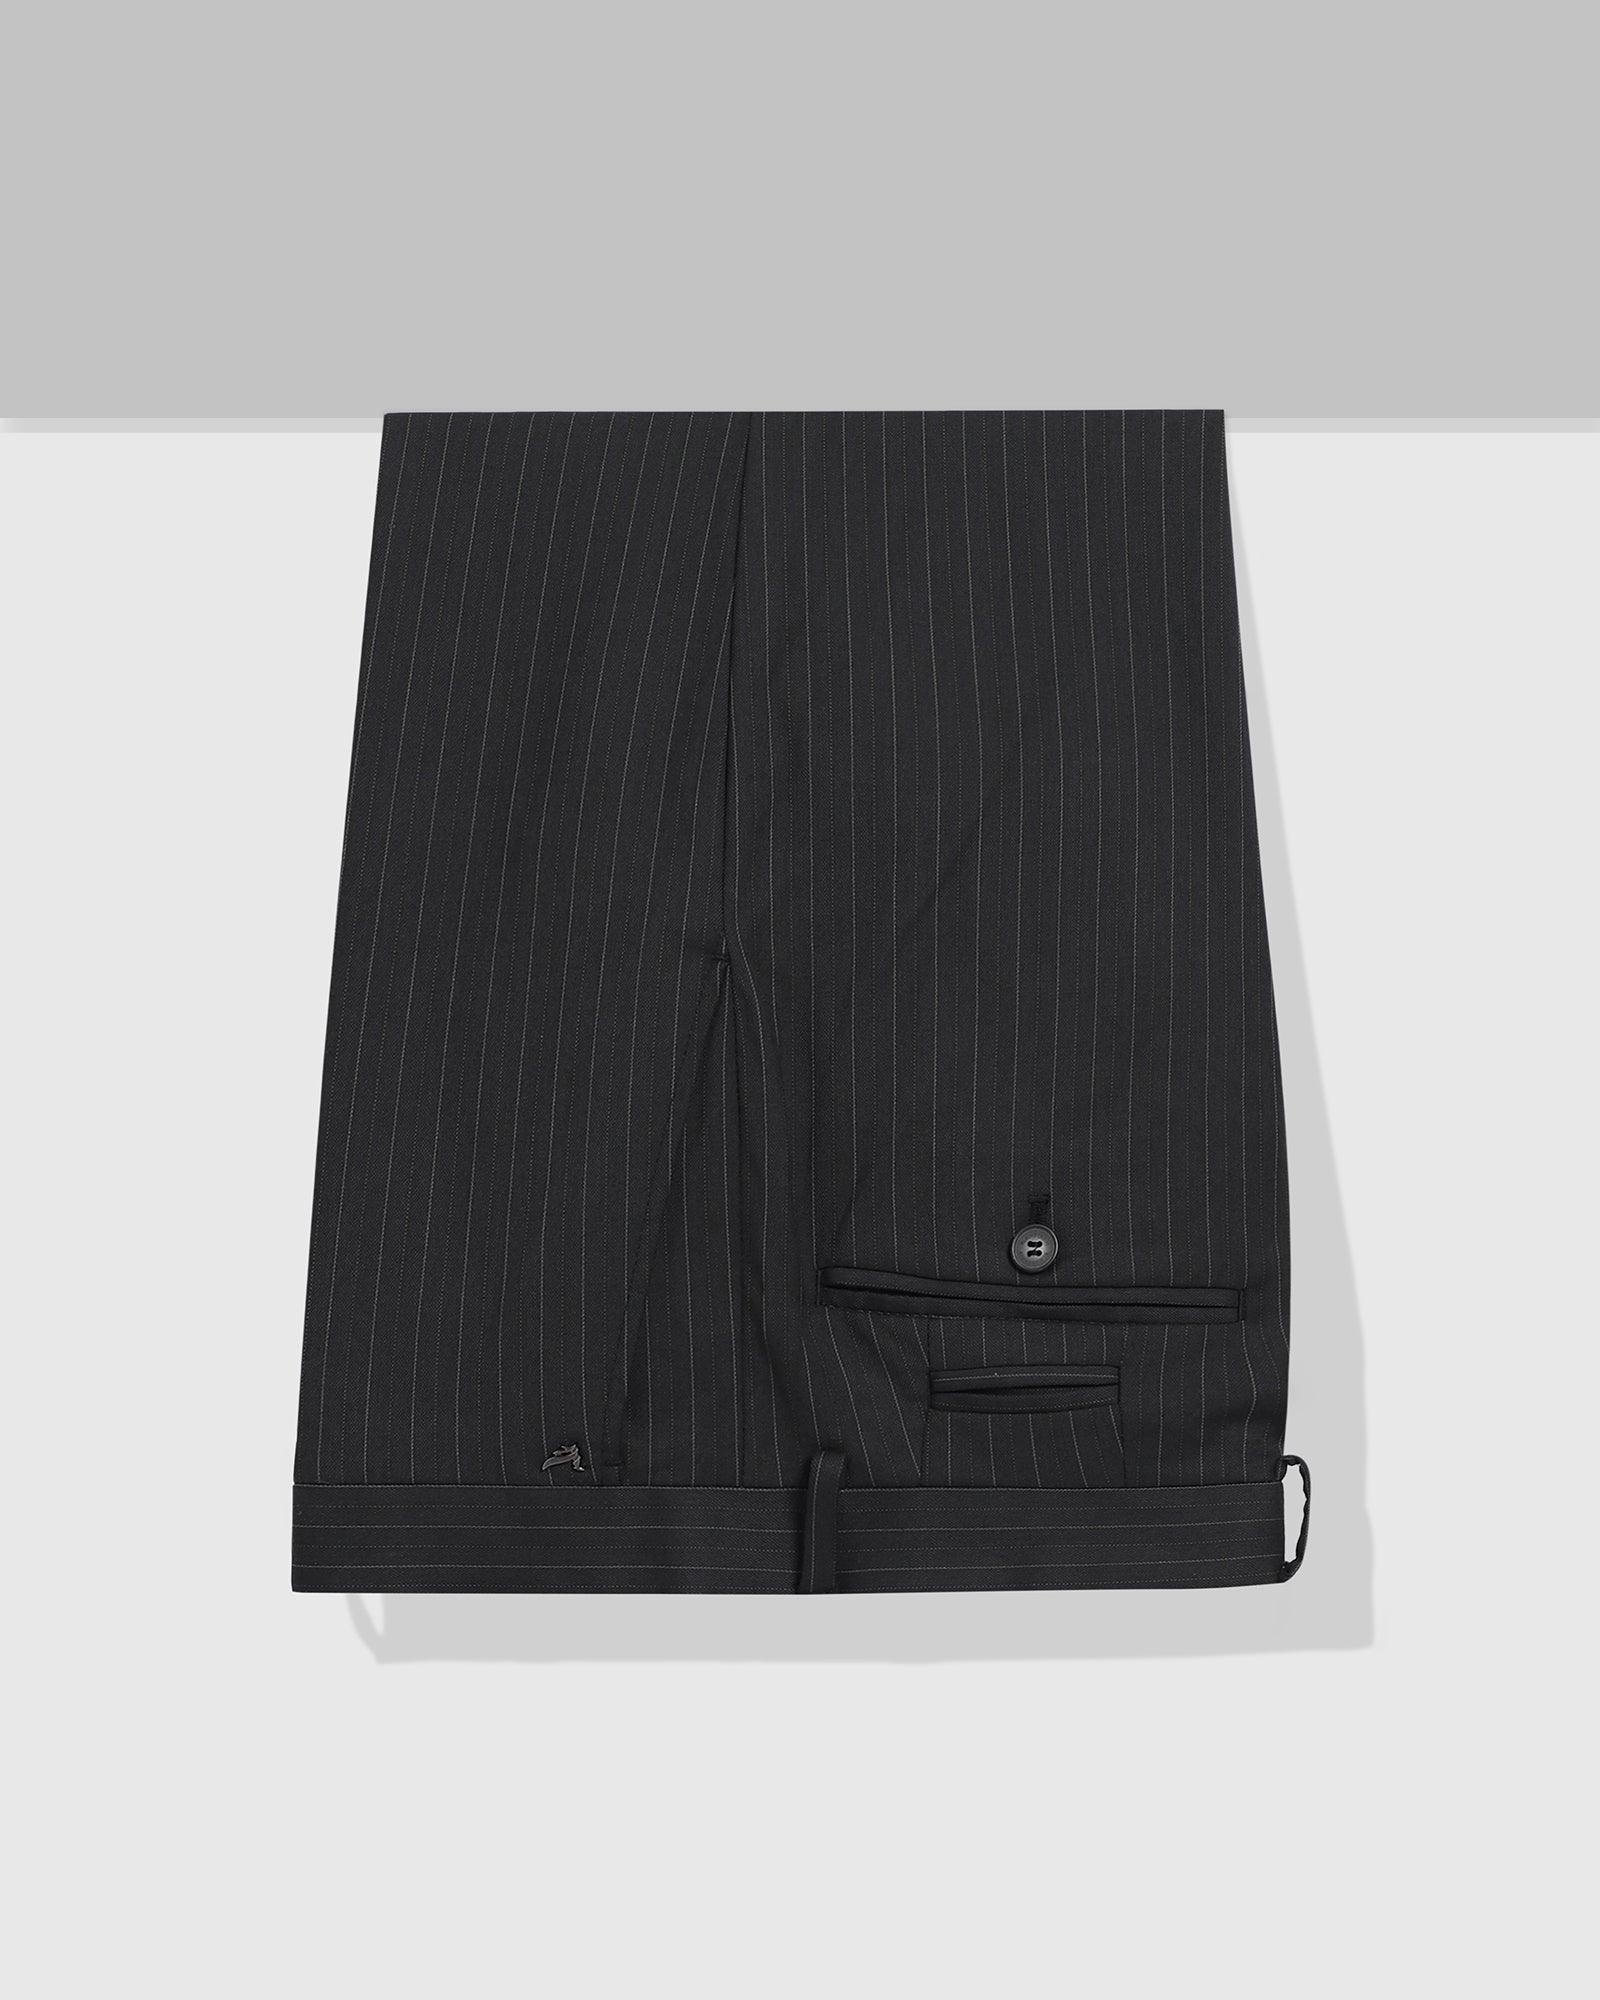 Slim Fit B-91 Formal Black Striped Trouser - Mac